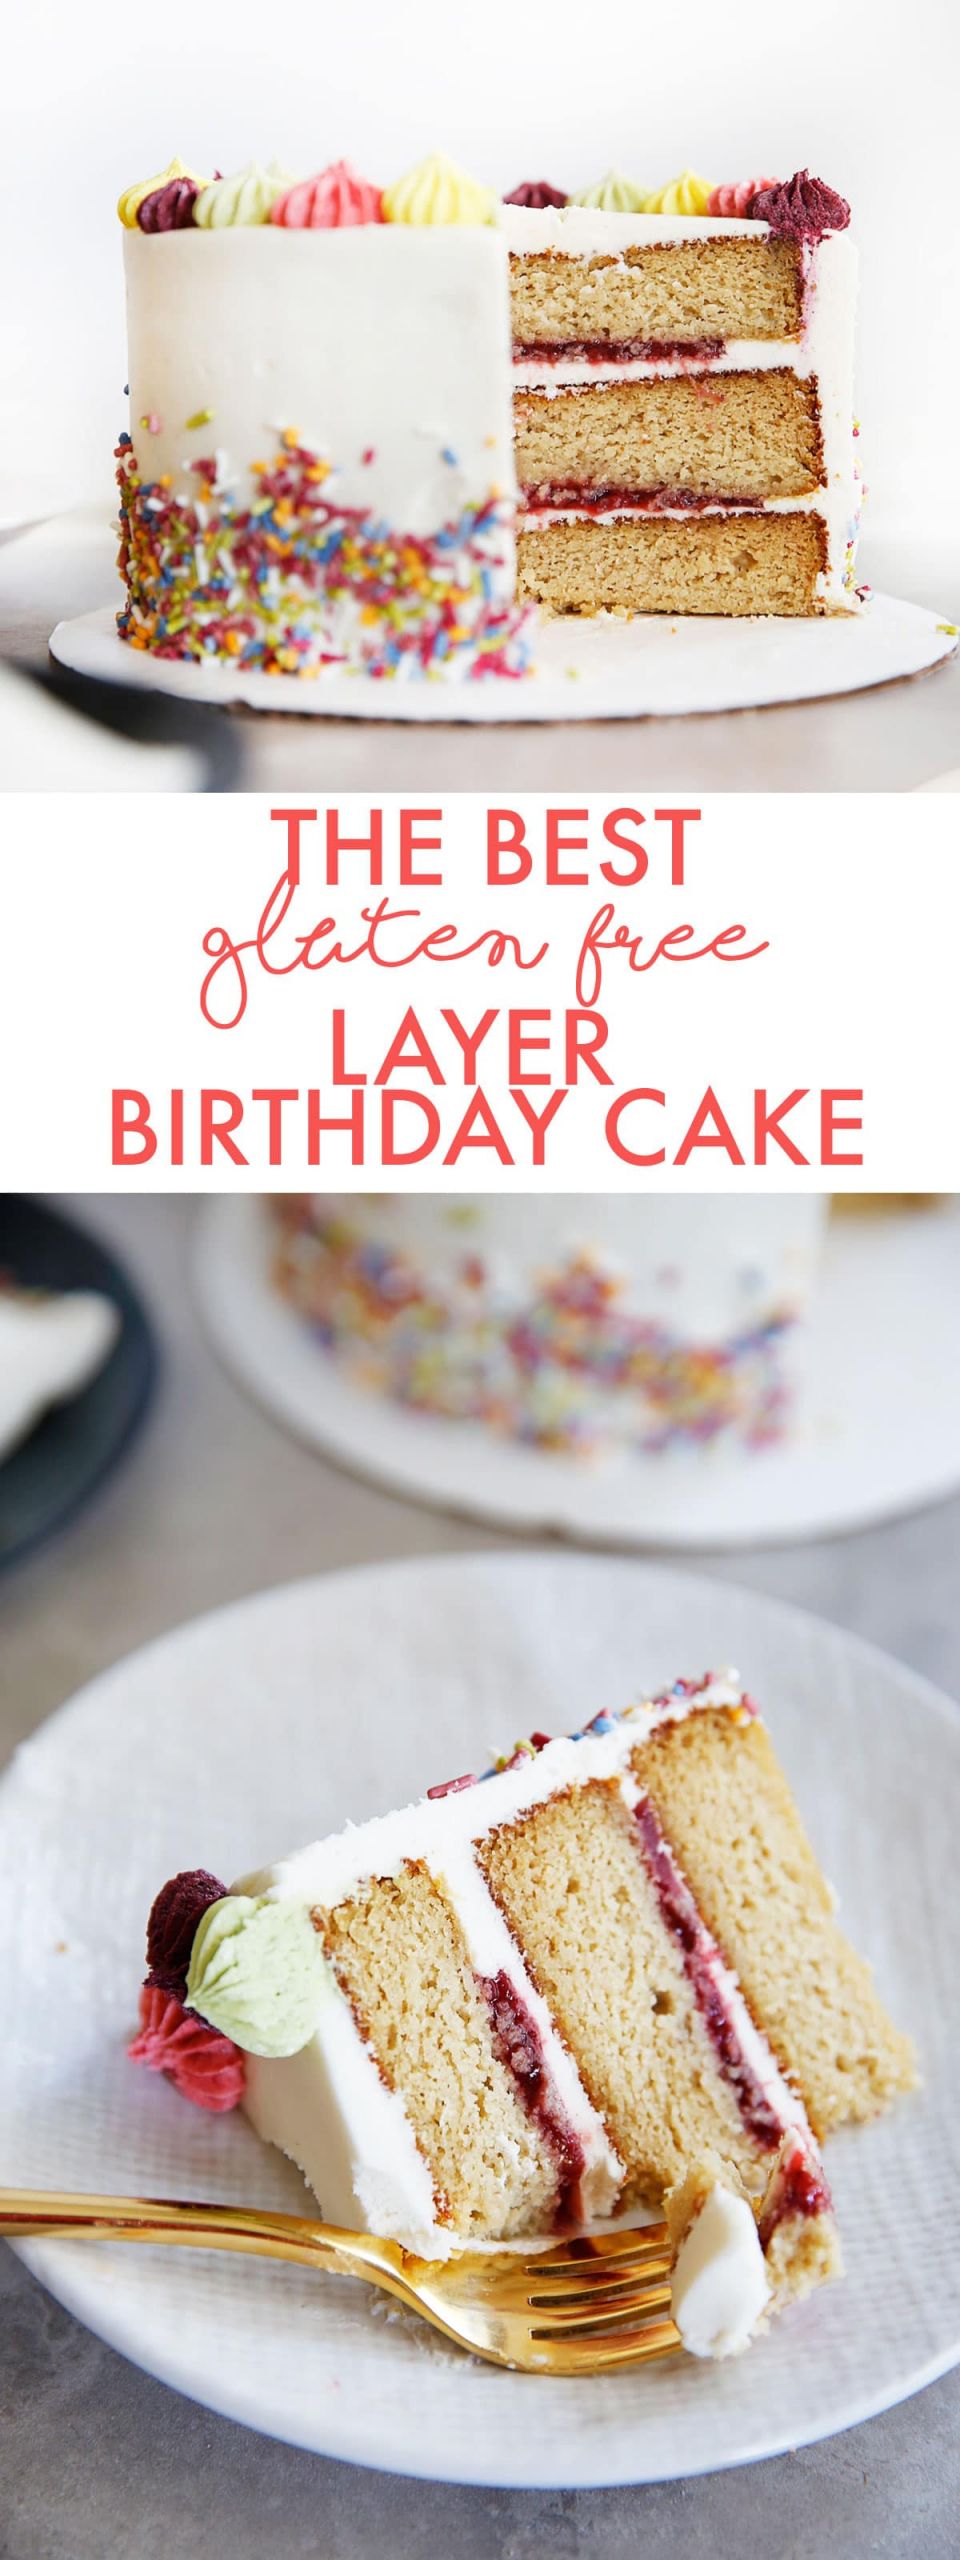 Gluten Free Dairy Free Birthday Cake
 The BEST Gluten Free Layer Birthday Cake Lexi s Clean